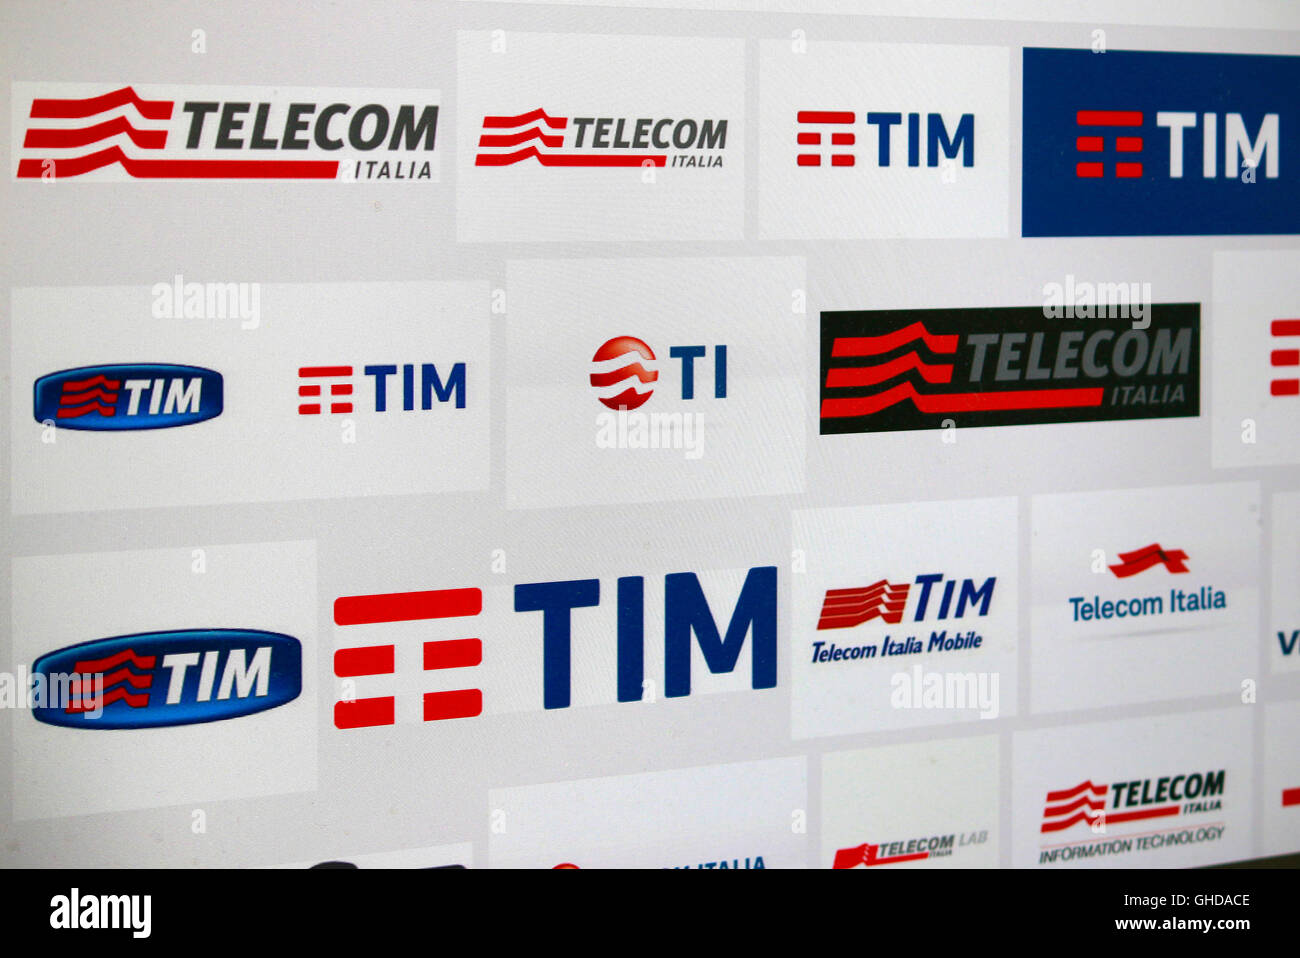 Telecom italia hi-res stock photography and images - Alamy